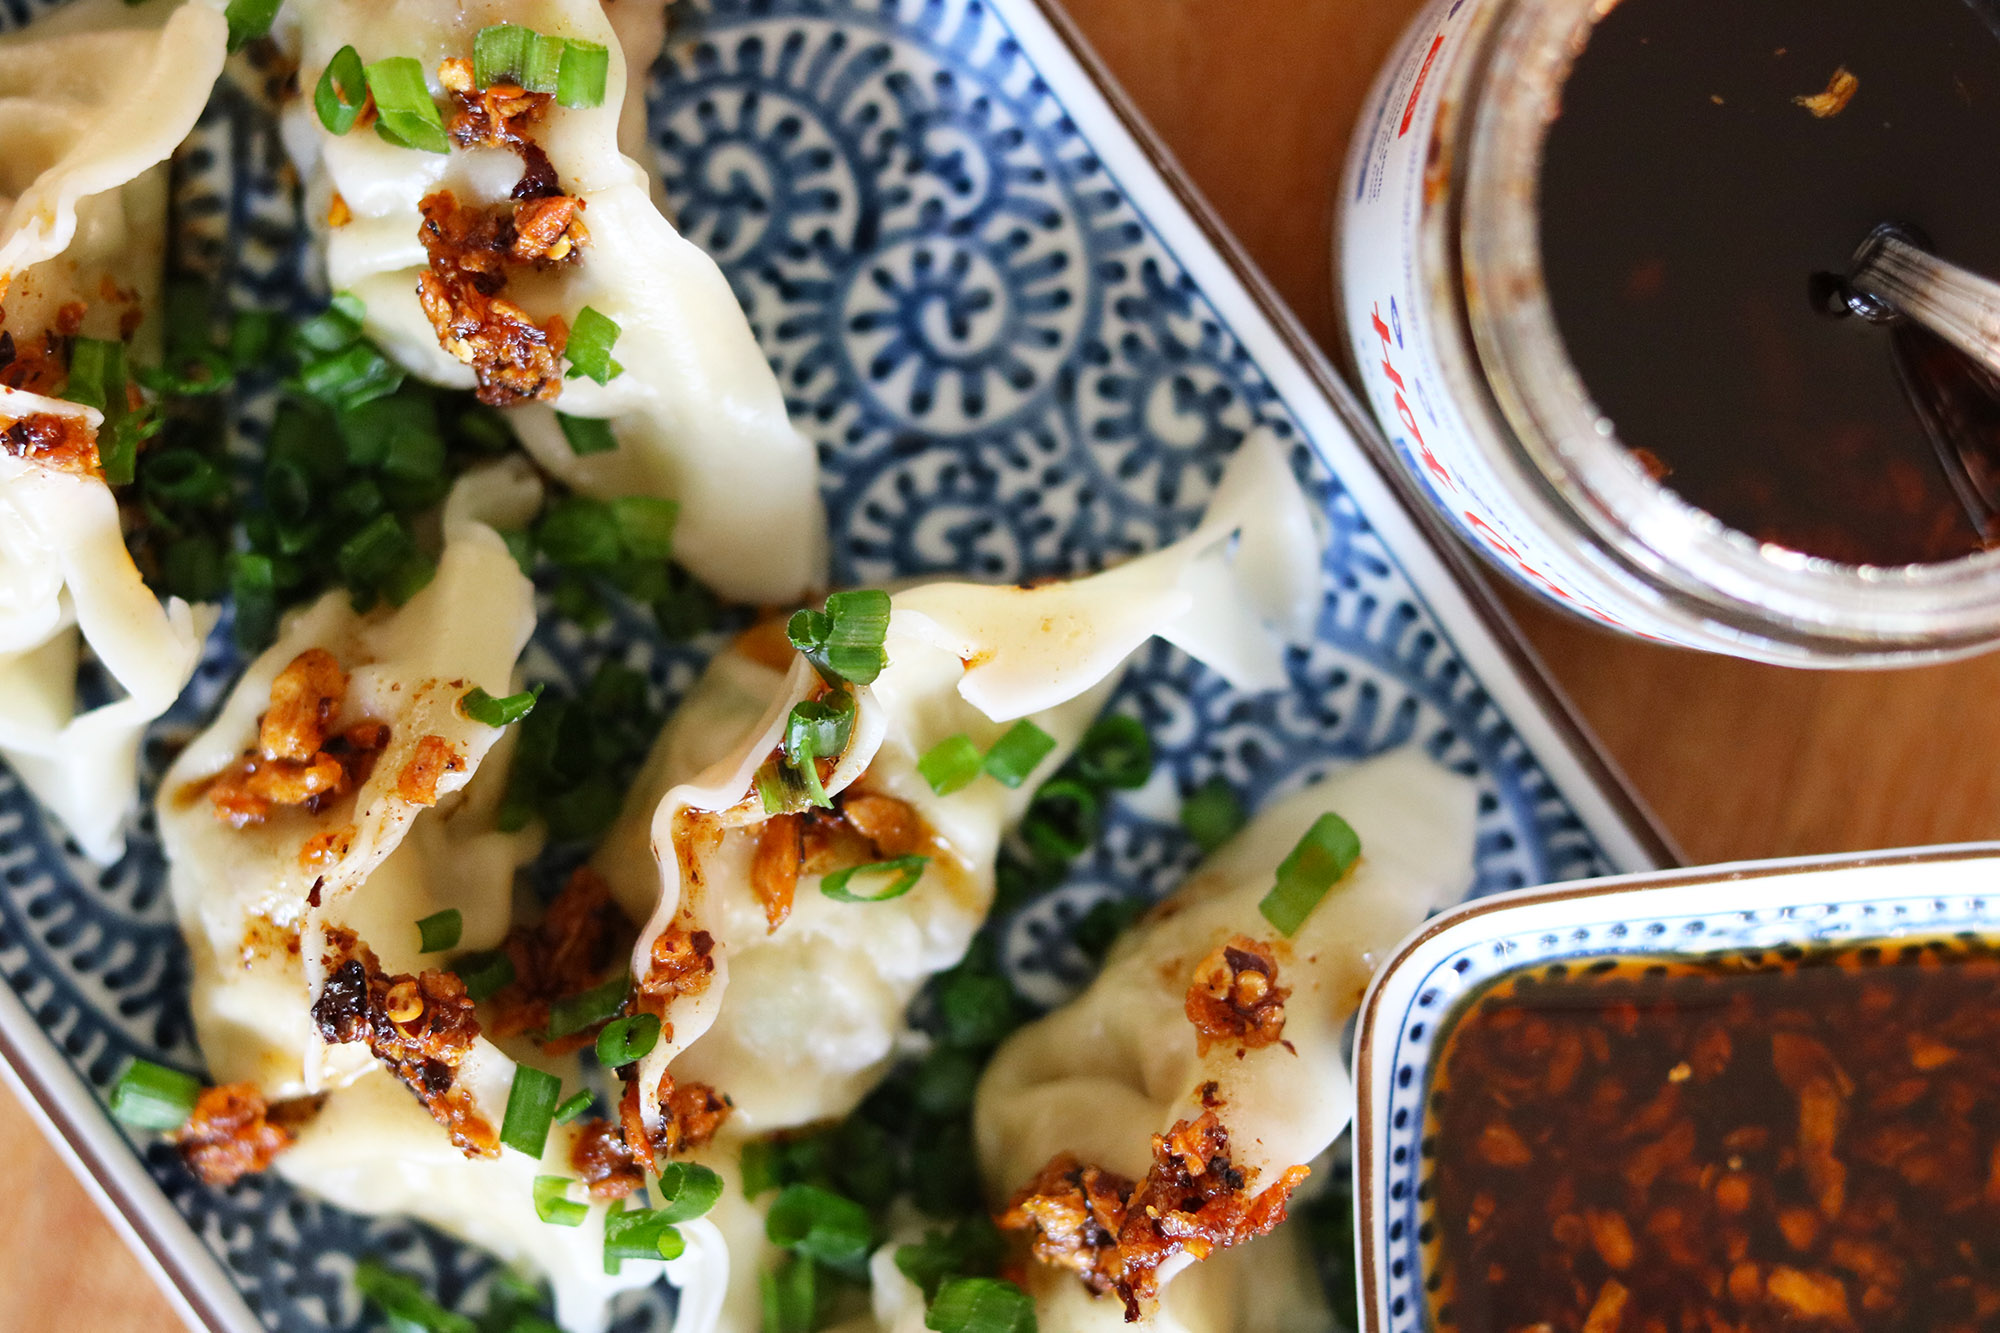 10-minute meal: Dumplings with Hot Garlic Chili Crisp